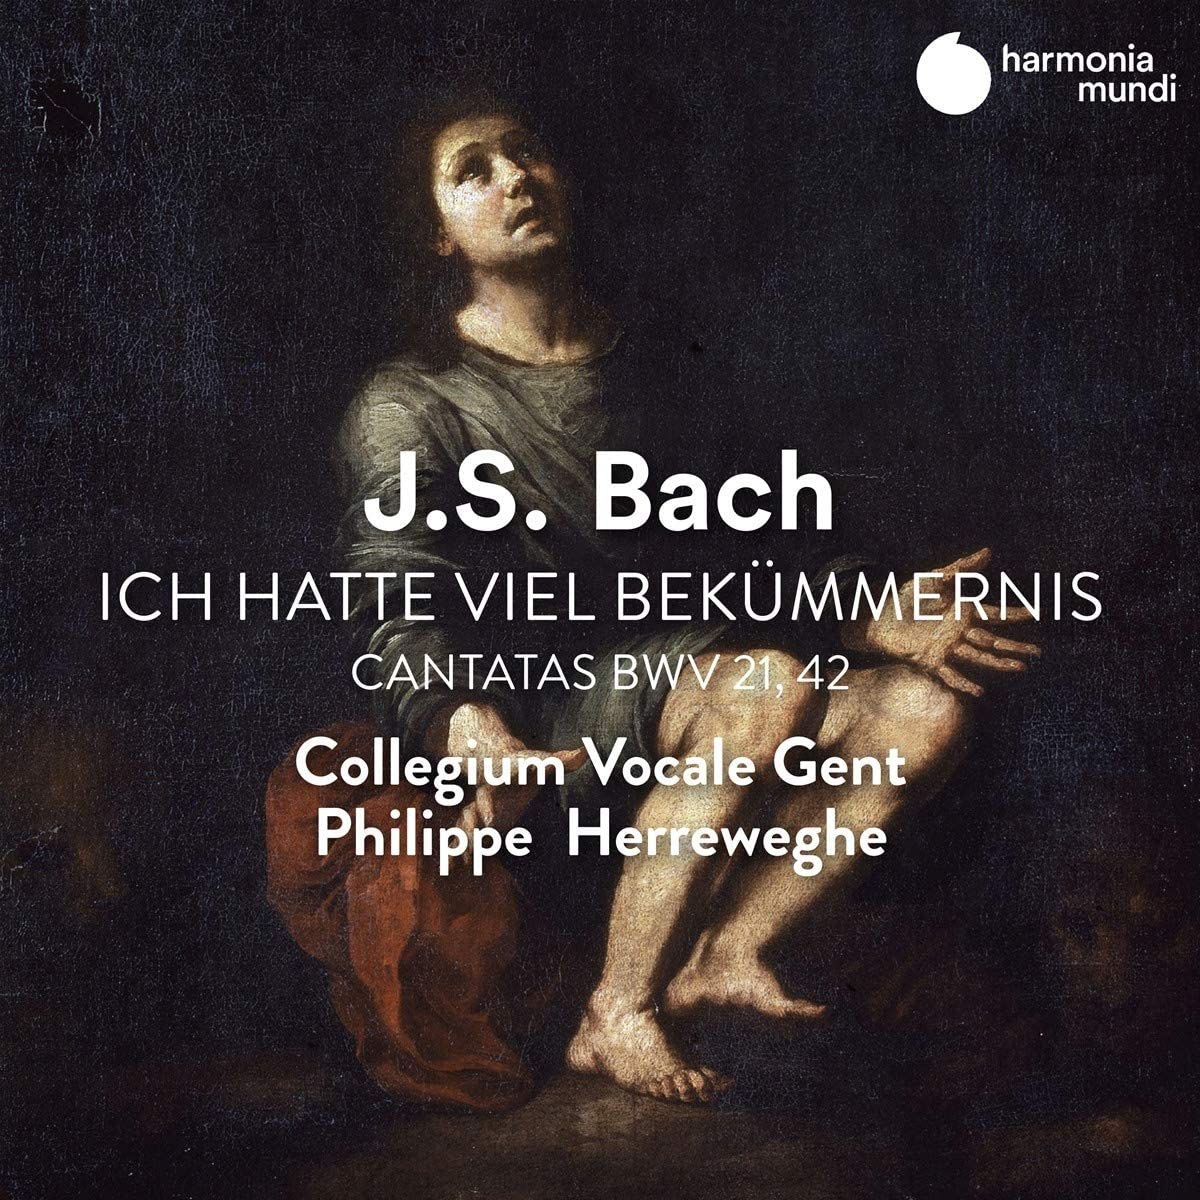 J.S. Bach: Ich Hatte Viel Bekummernis - Cantatas BWV 21, 42 | La Chapelle Royale, Collegium Vocale Gent, Philippe Herreweghe